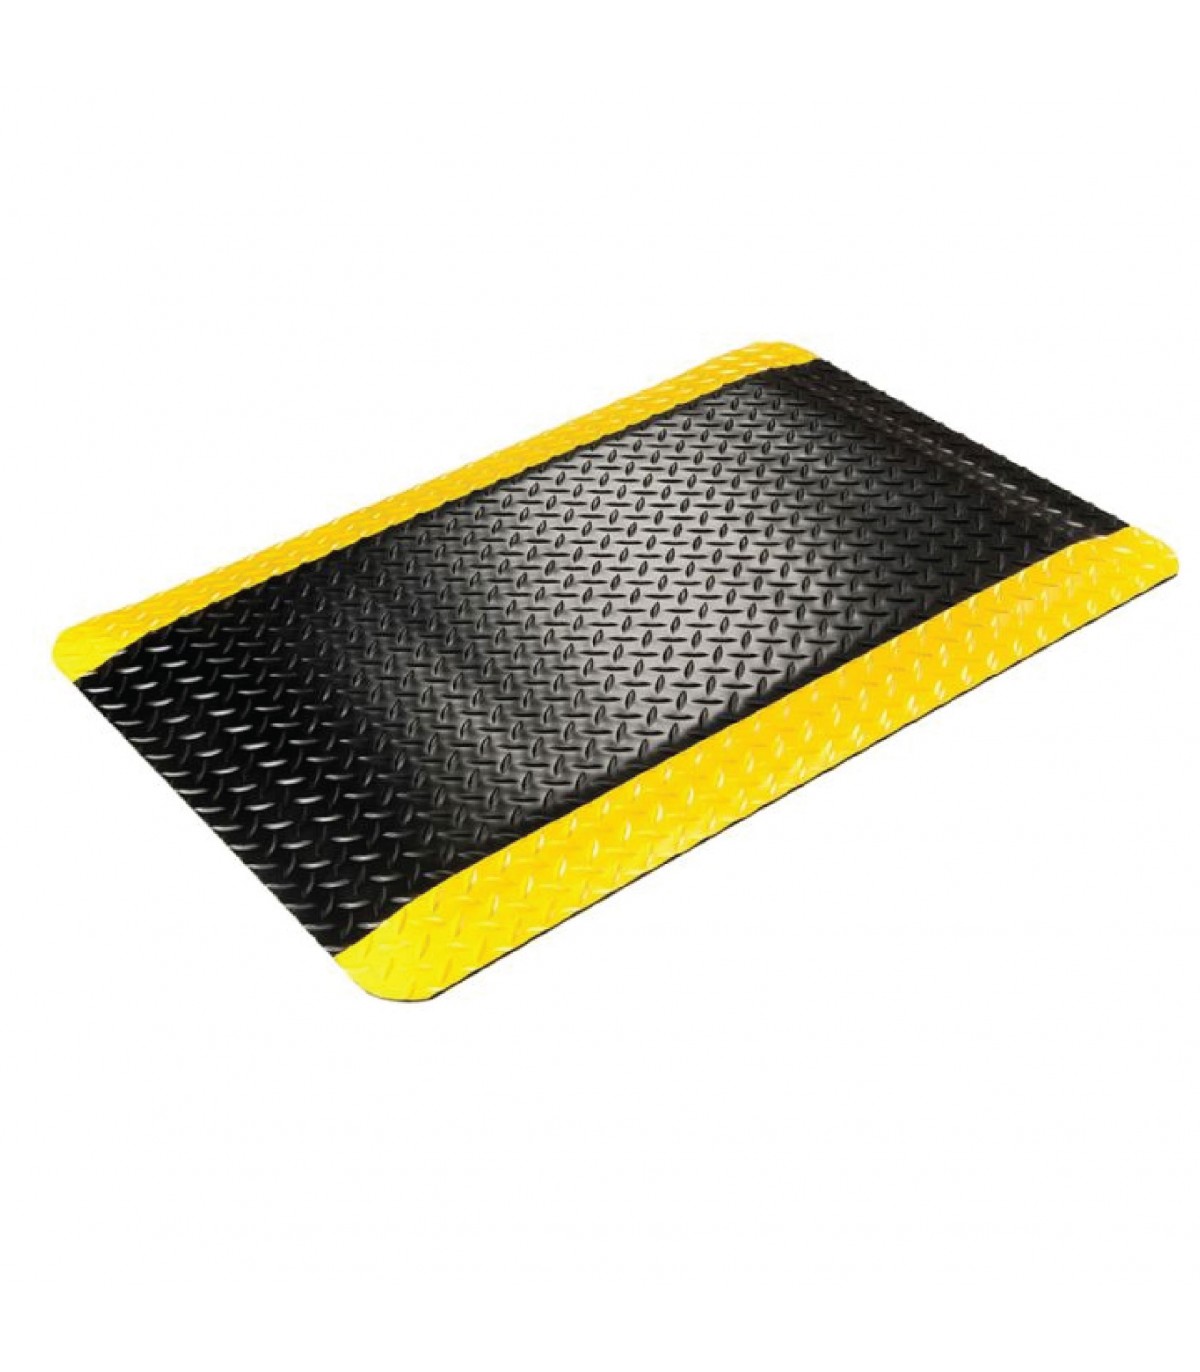 https://www.econogreen.com.sg/1043-superlarge_default/wearwell-ultrasoft-diamond-plate-spongecote-black-with-yellow-borders-anti-fatigue-mats.jpg